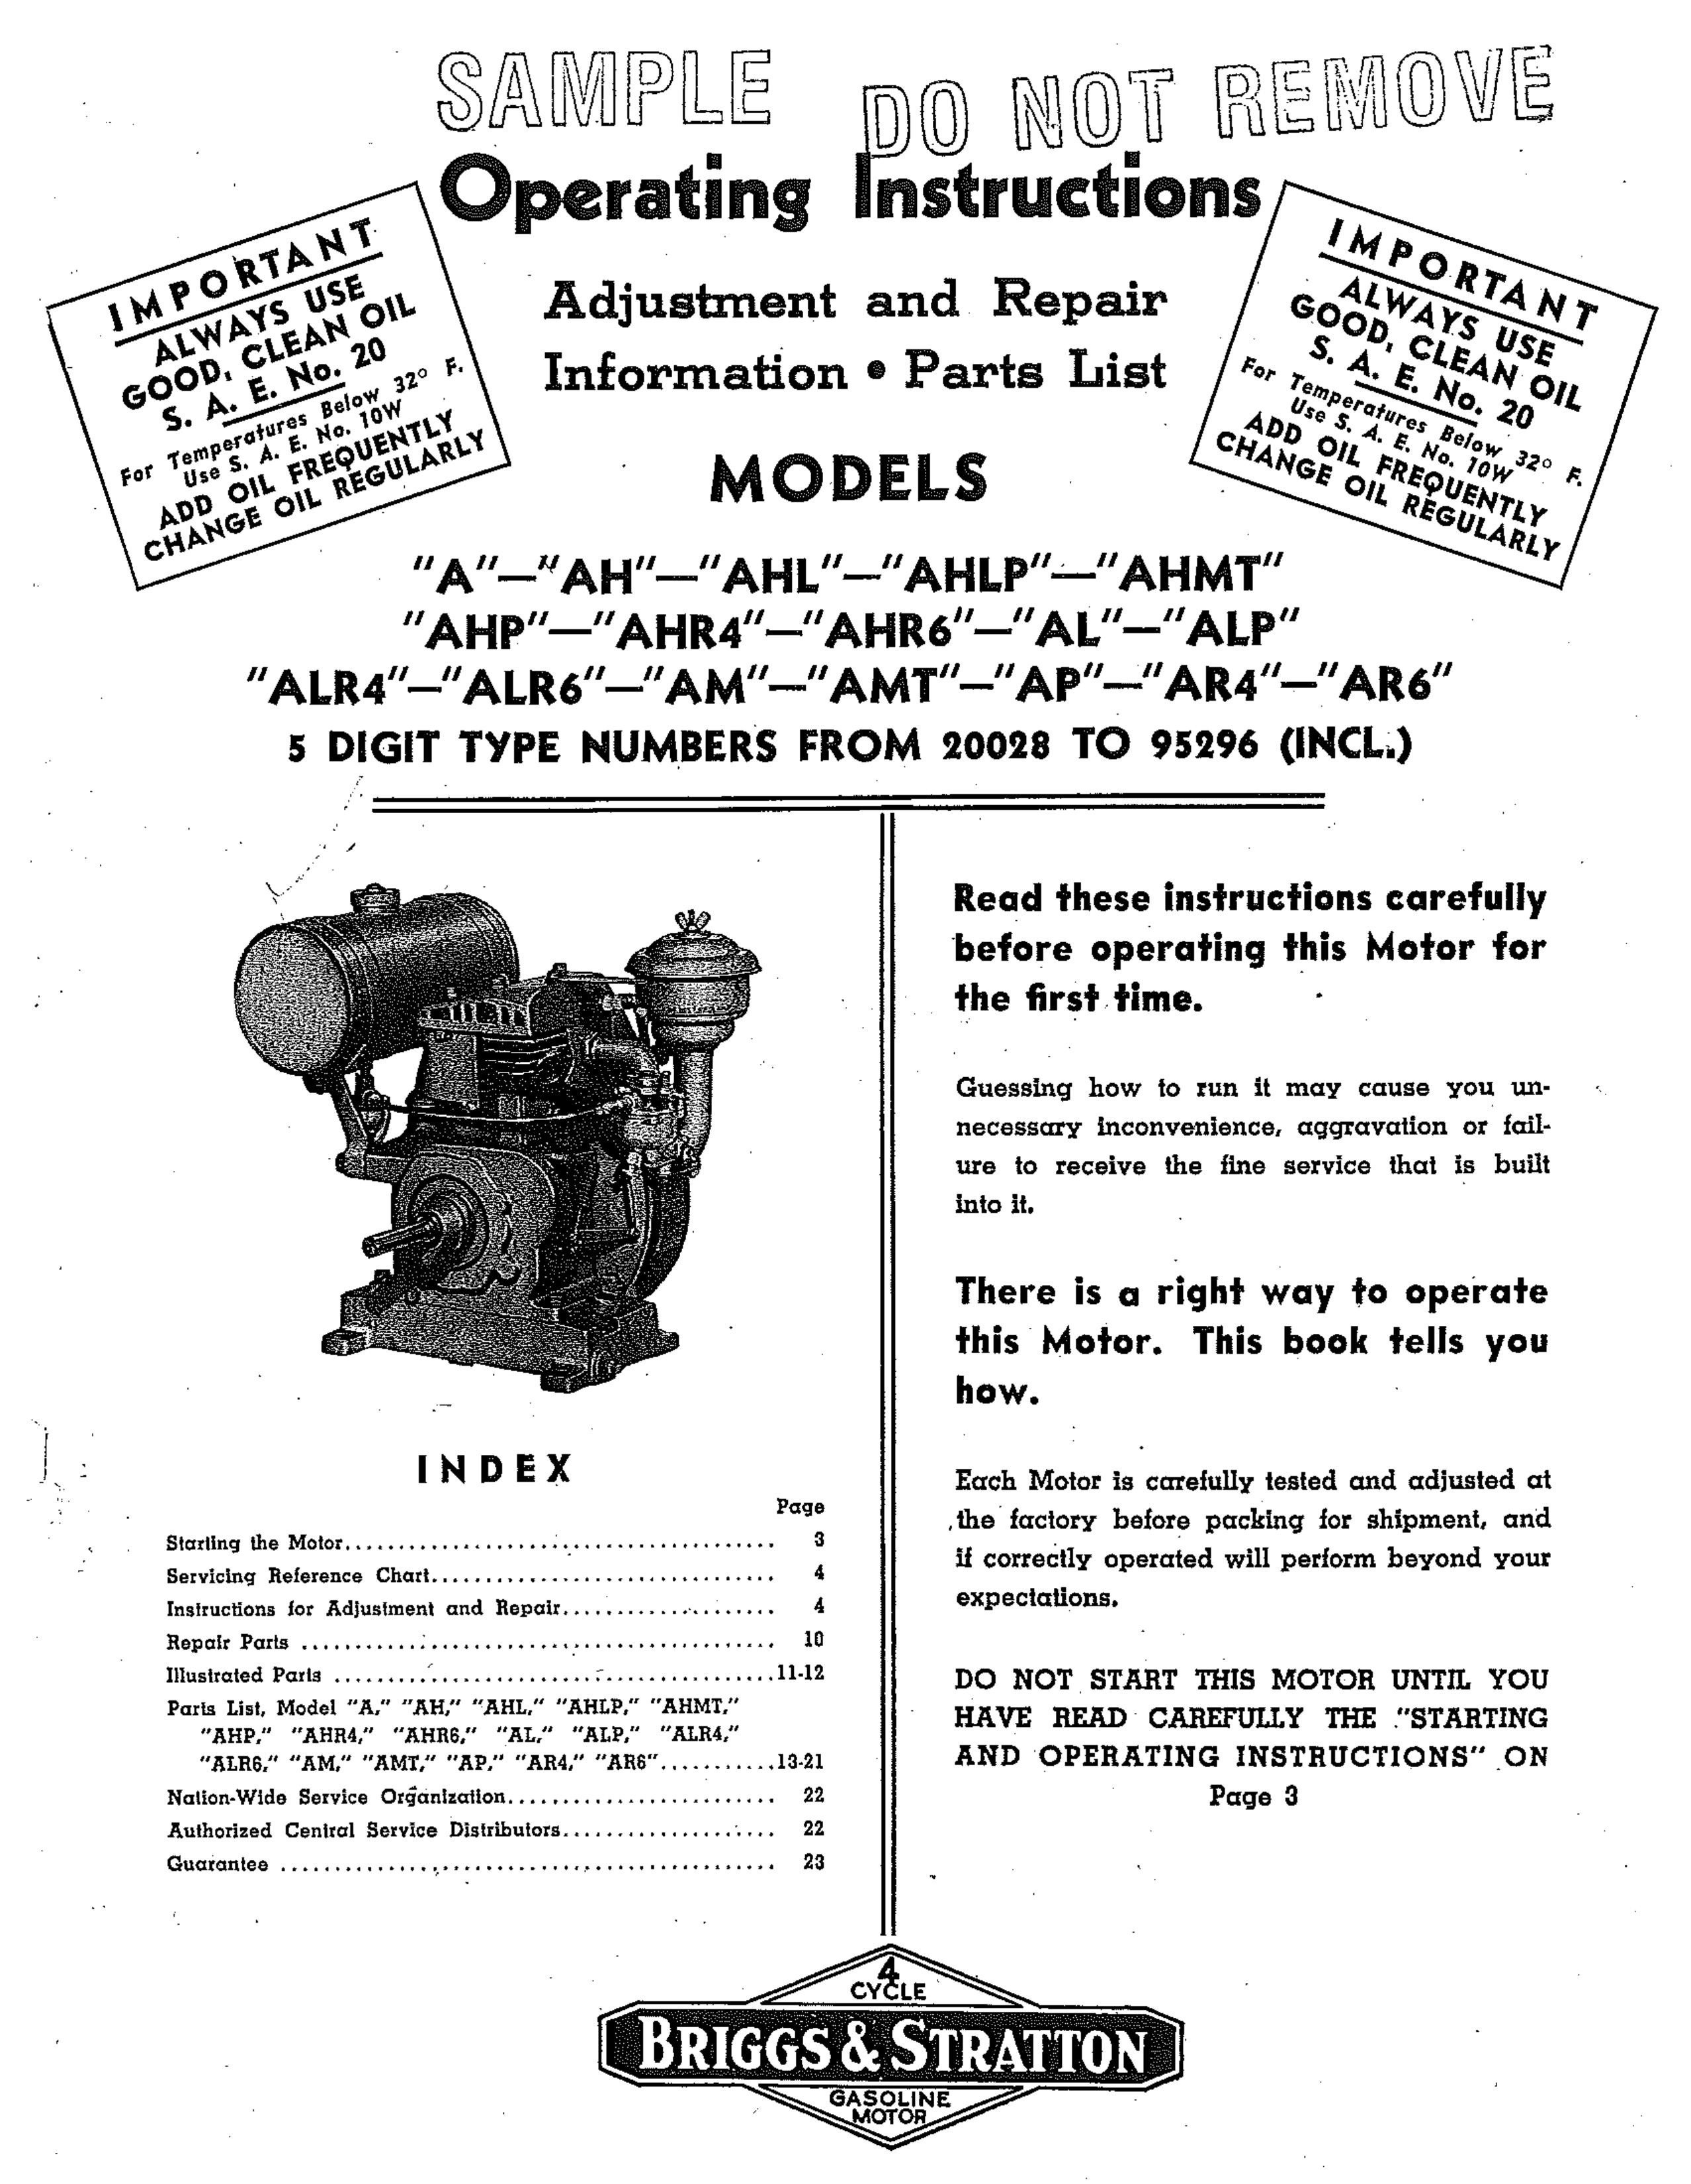 Briggs & Stratton AHR4 Outboard Motor User Manual